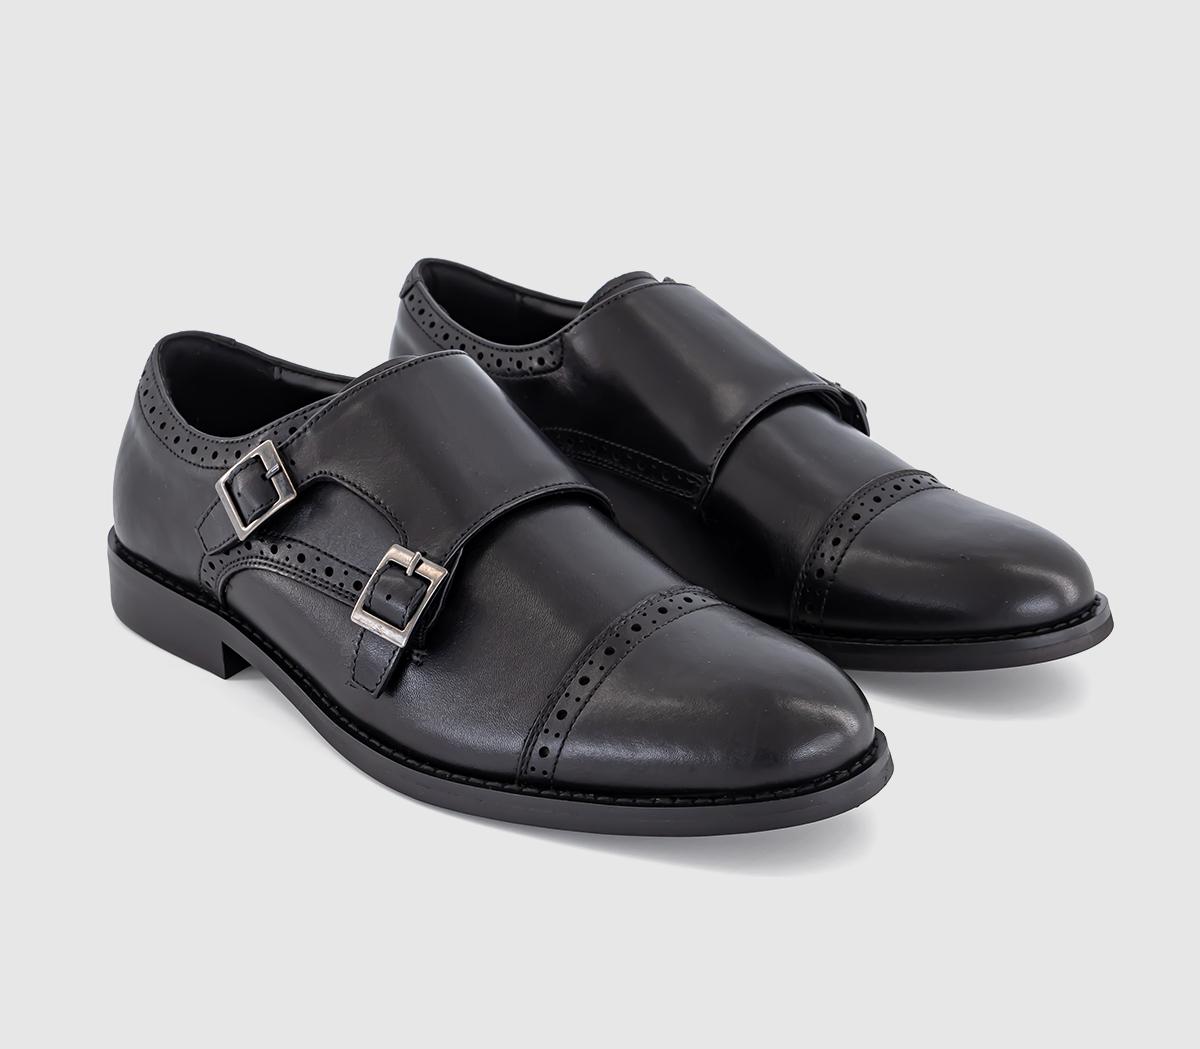 OFFICE Mens Myles Double Strap Monk Shoes Black Leather, 8